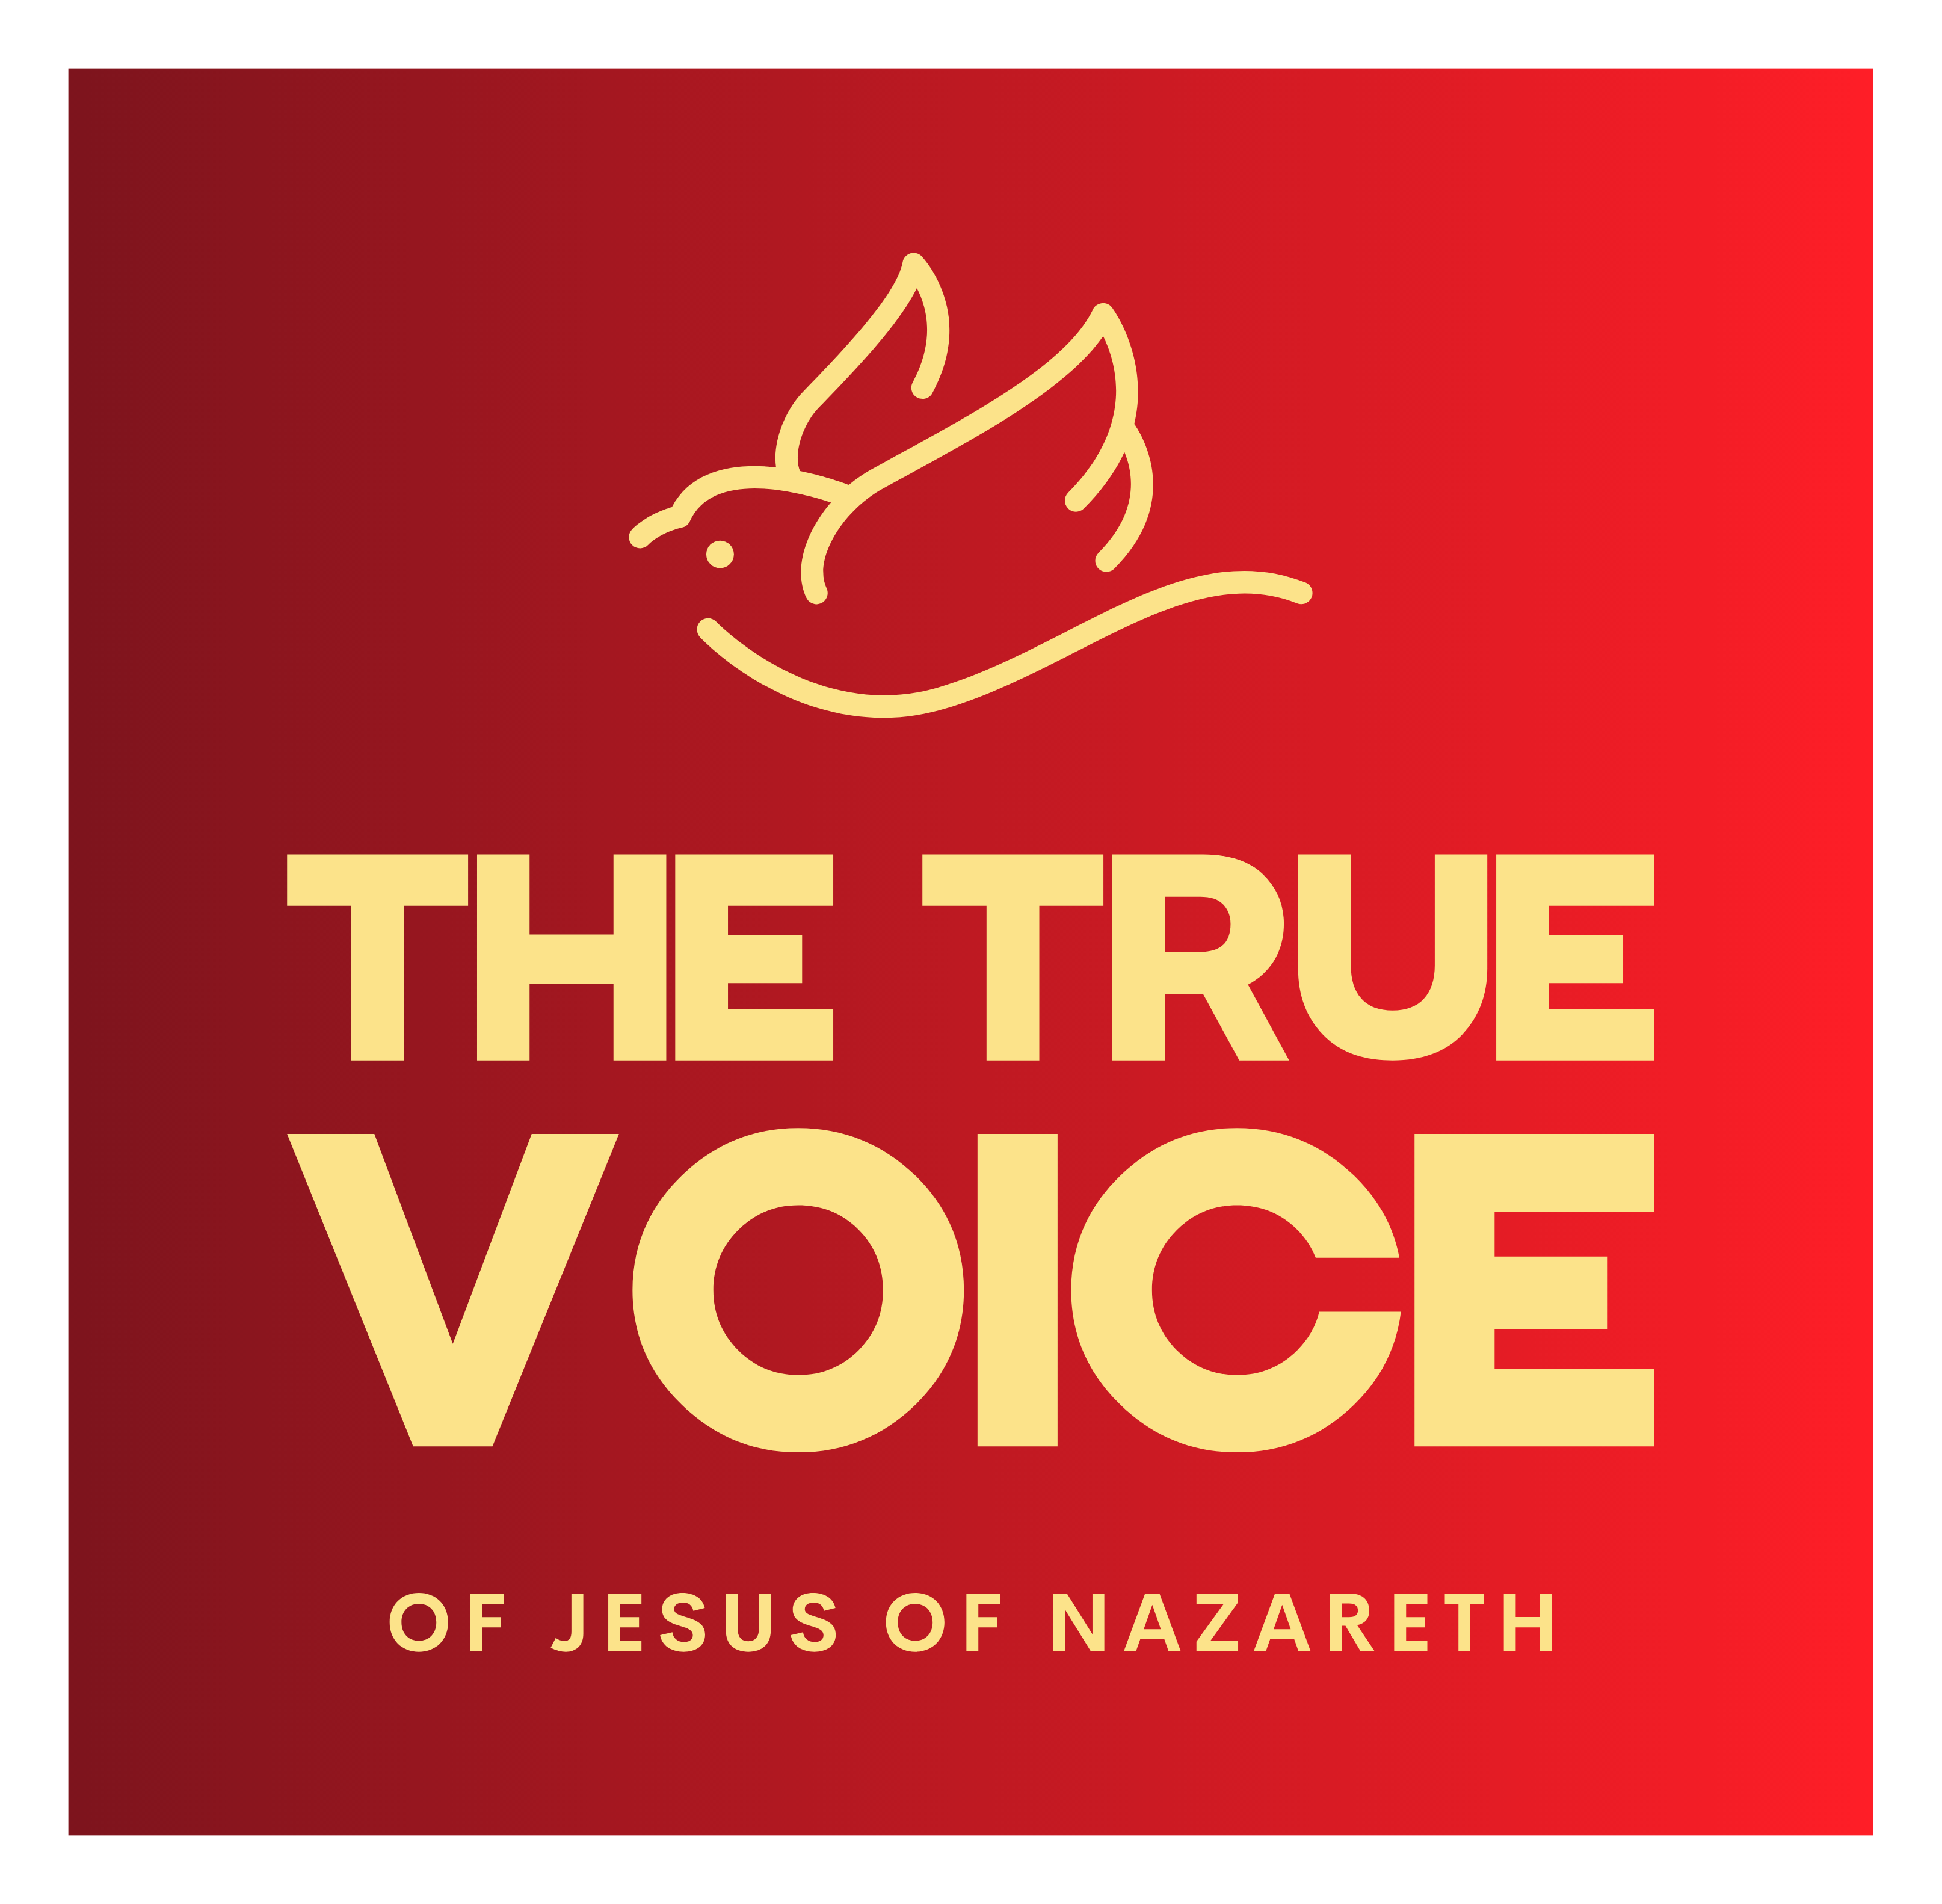 The true voice of Jesus of Nazareth